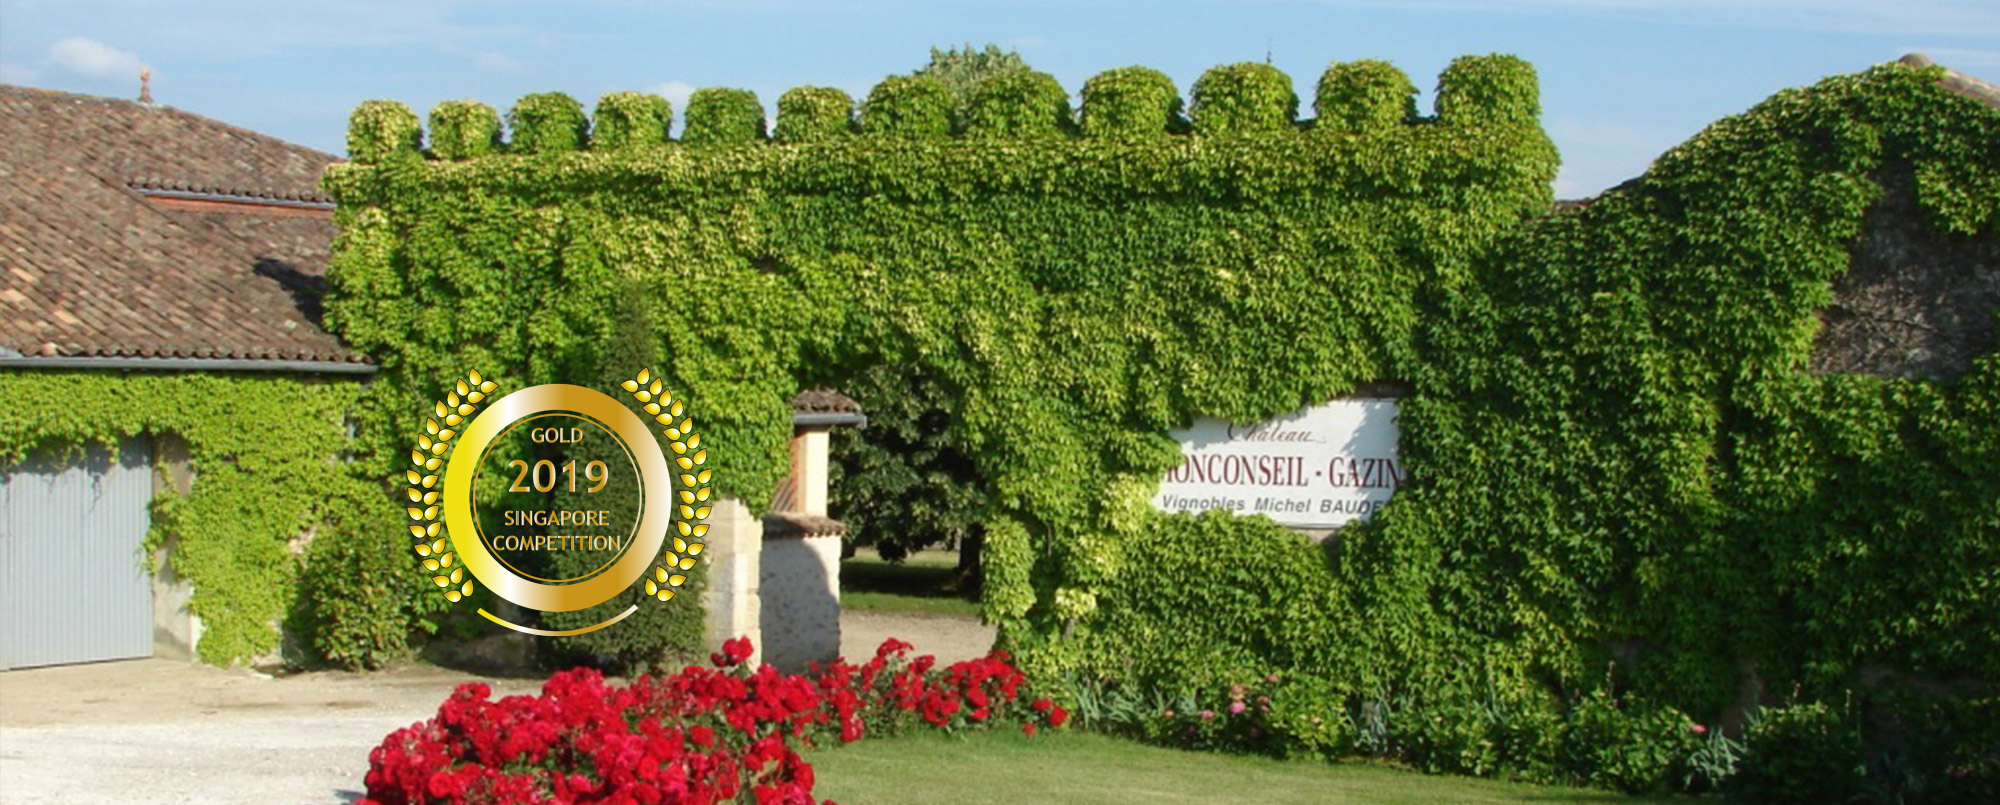 Château MONCONSEIL-GAZIN - SINGAPORE NEWSPAPER